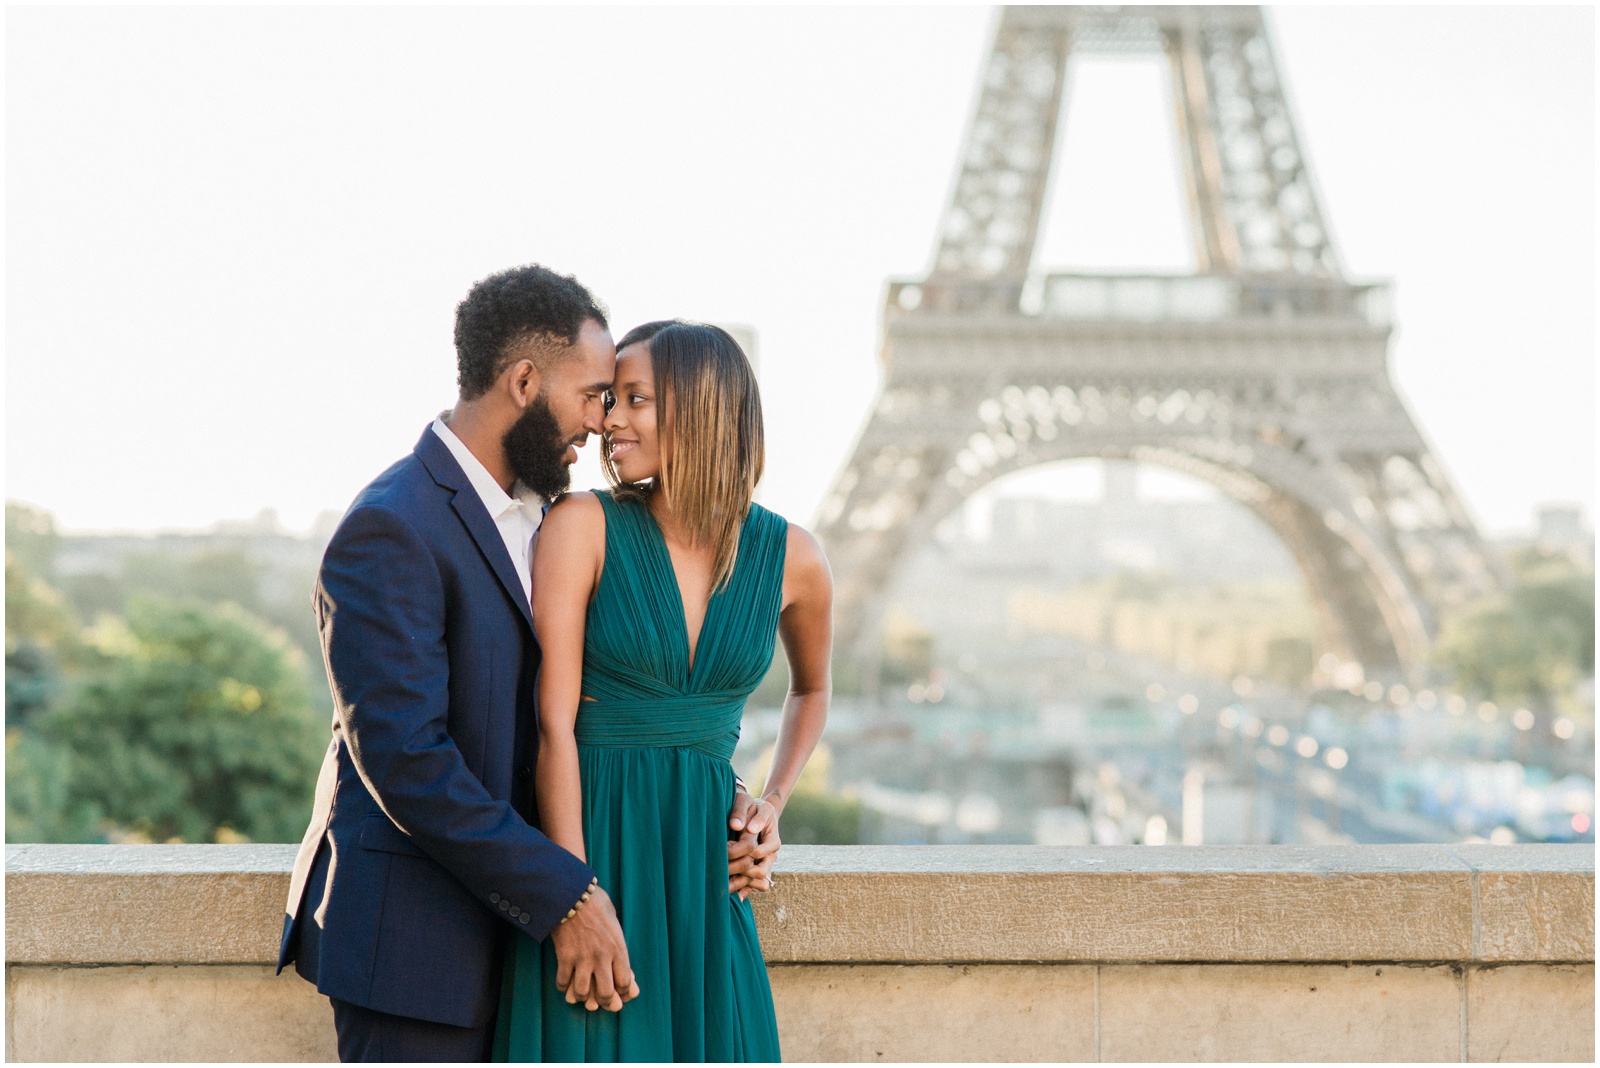 Romantic Eiffel Tower Engagement